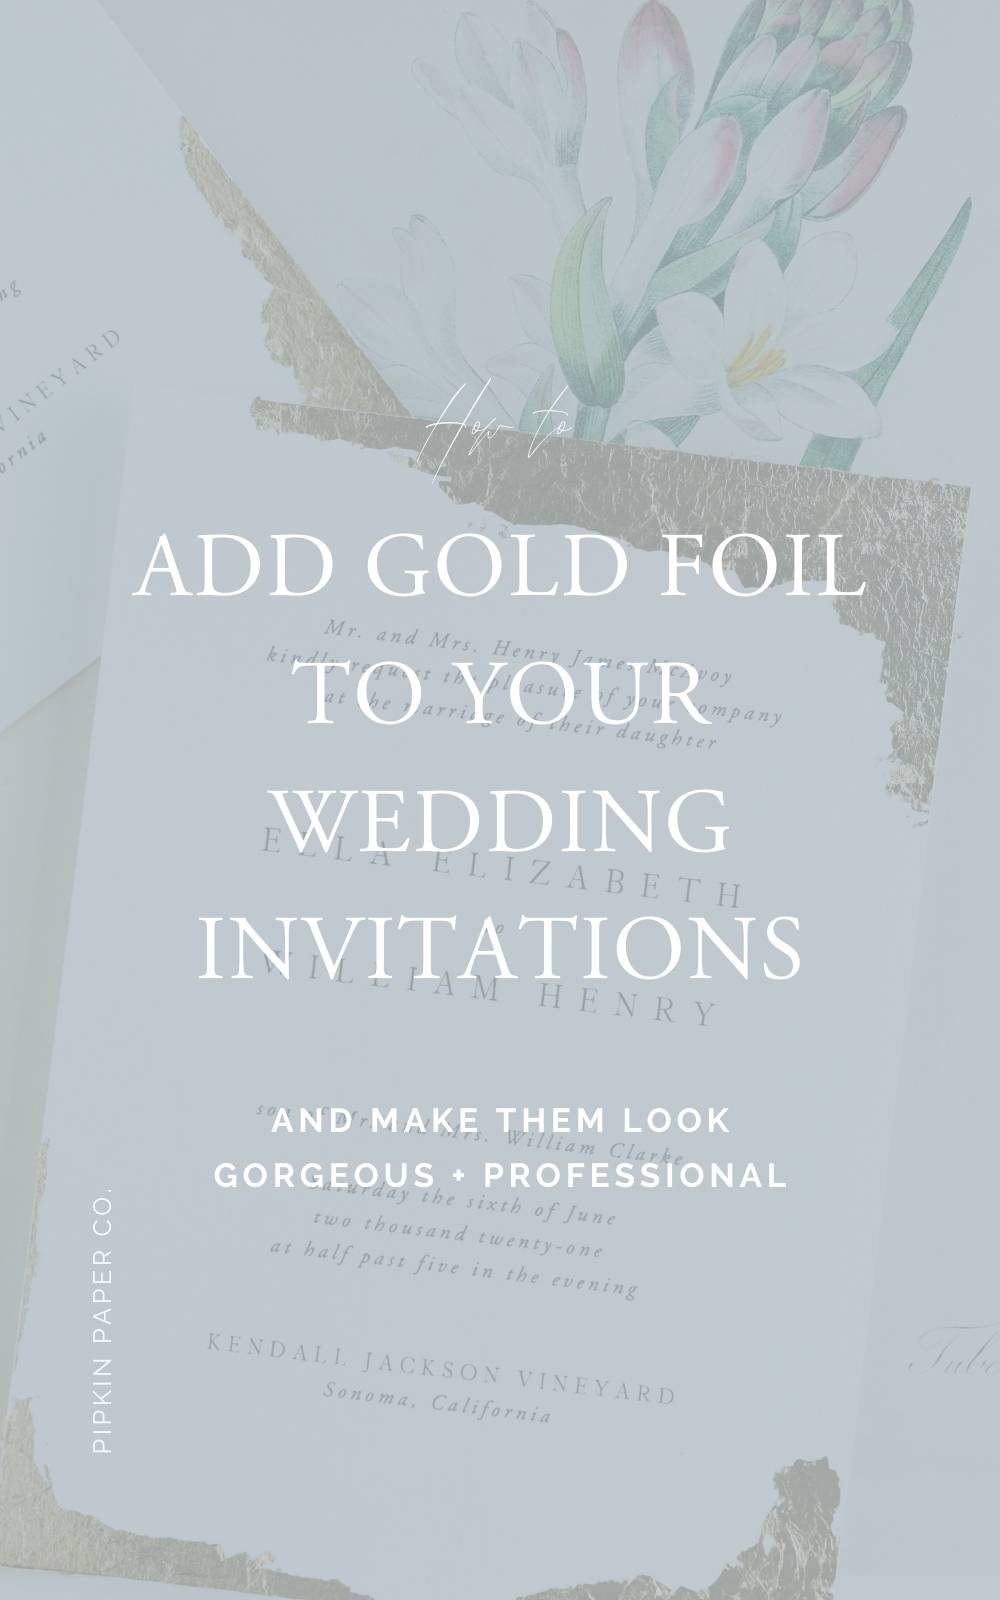 DIY Gold Foil Wedding Invitations Pipkin Paper Company